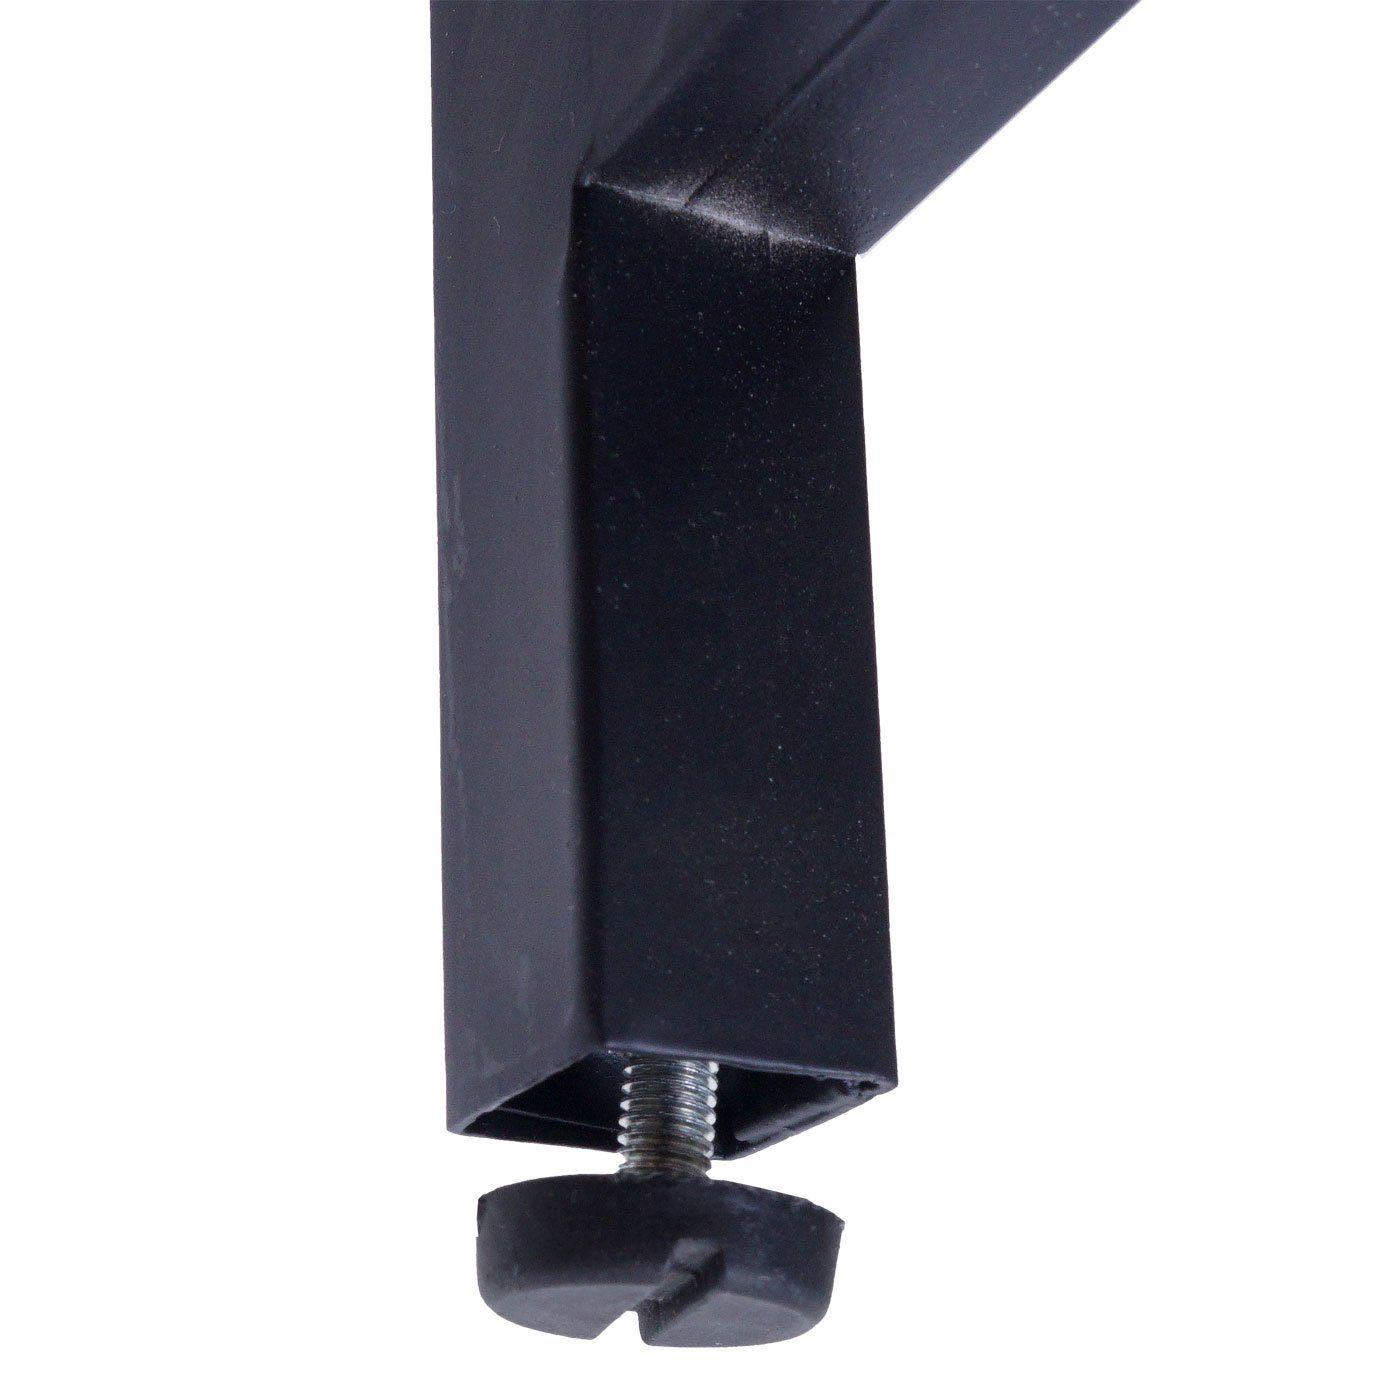 MCW Schreibtisch MCW-K80, schwarz | Melaminbeschichtet Marmor-Optik schwarz Marmor-Optik